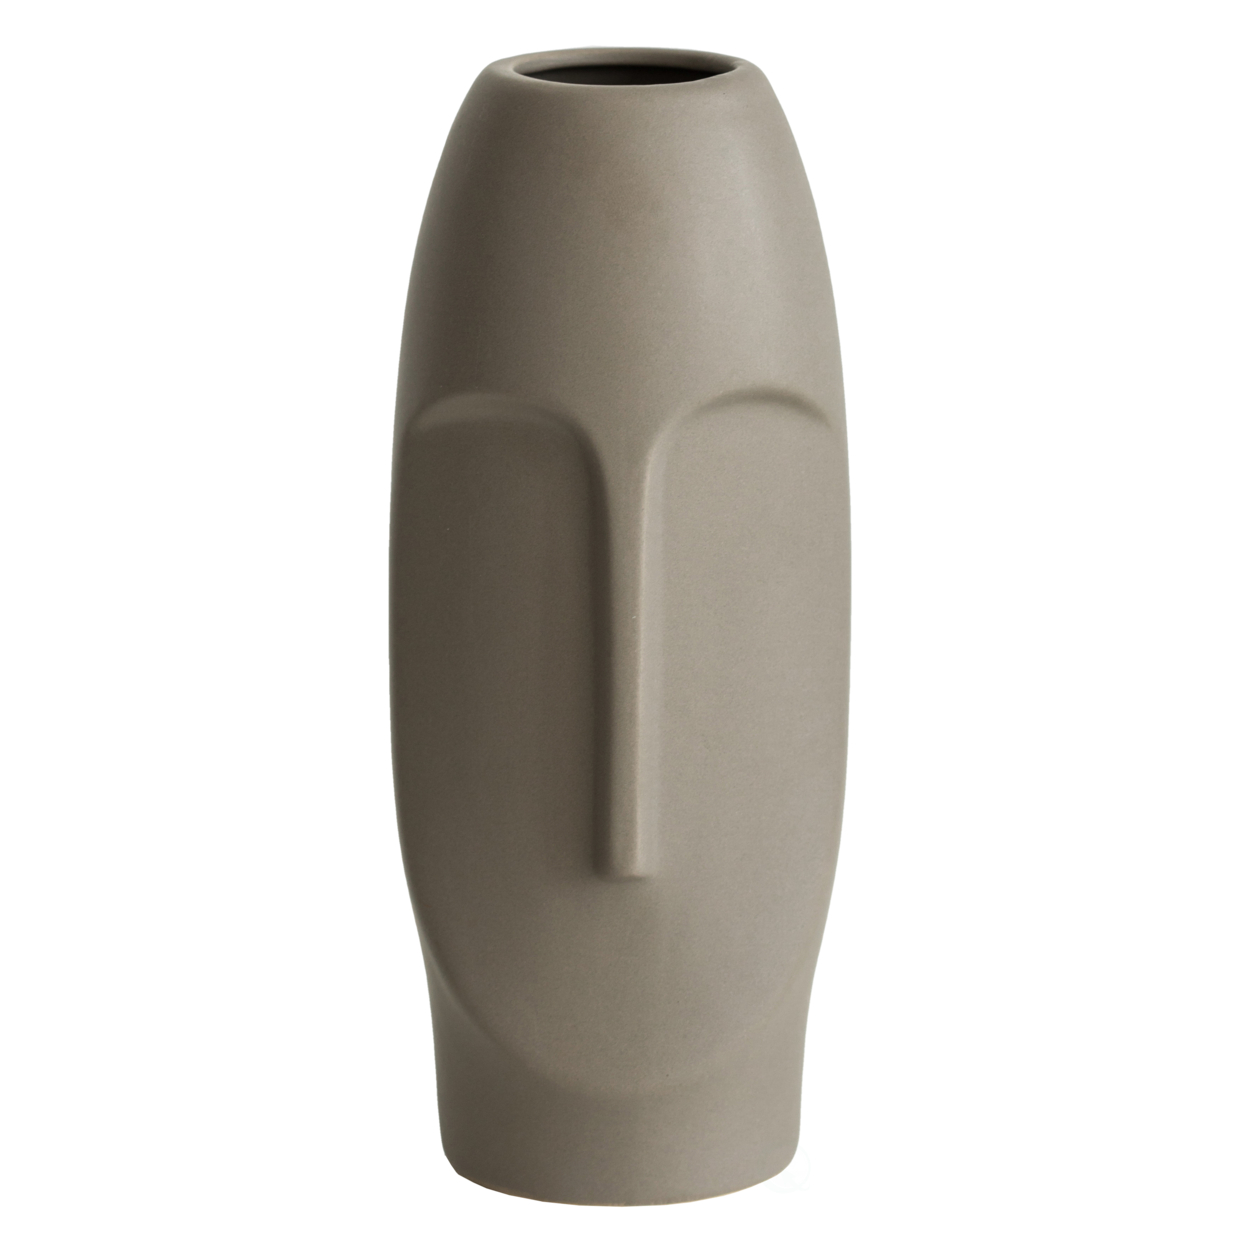 9.5 H Decorative Ceramic Abstract Face Modern Statue Sculpture Flower Centerpiece Vase - Dark Gray